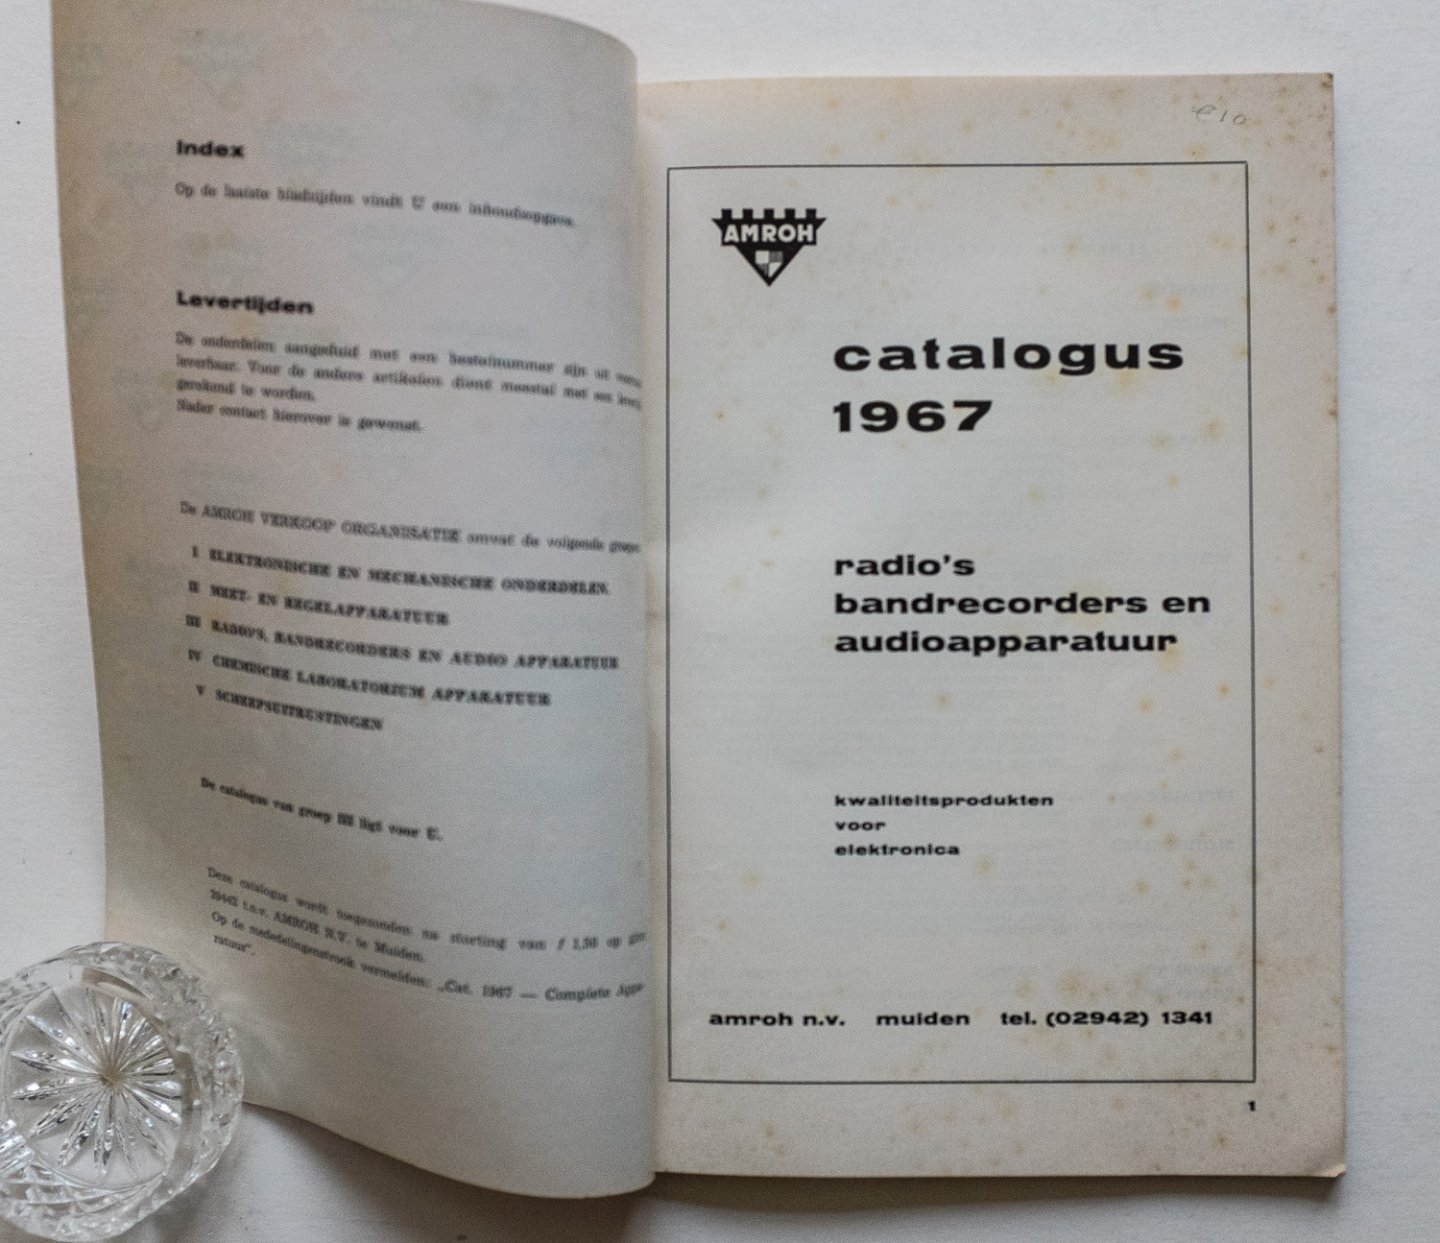  - AMROH catalogus 1967 - Radio-ontvangers, Bandrecorders, Audio-apparatuur